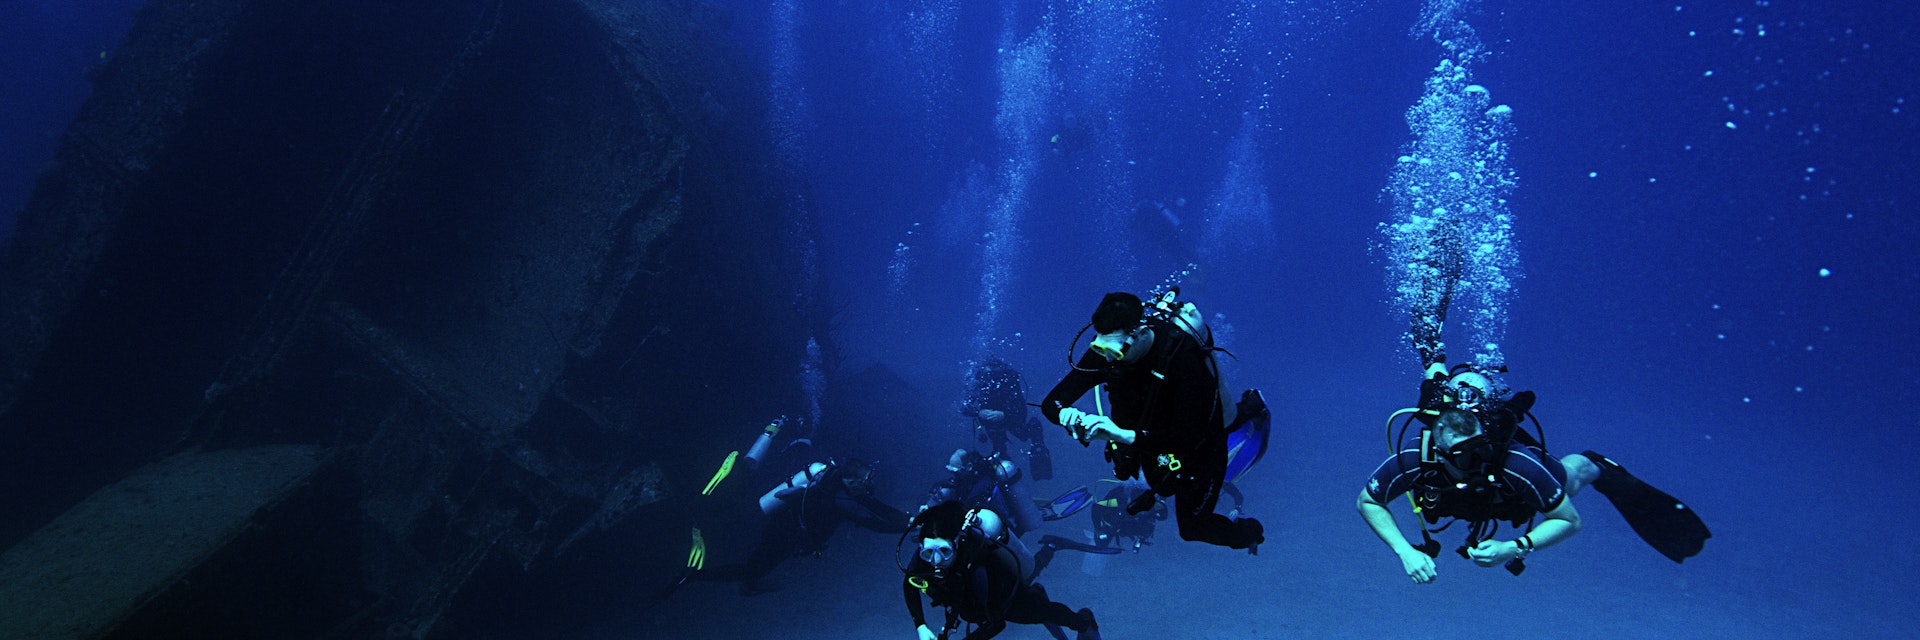 Scuba divers explore the El Aguila shipwreck in Roatan, Honduras. The ship sank in 110 feet of water in 1997.